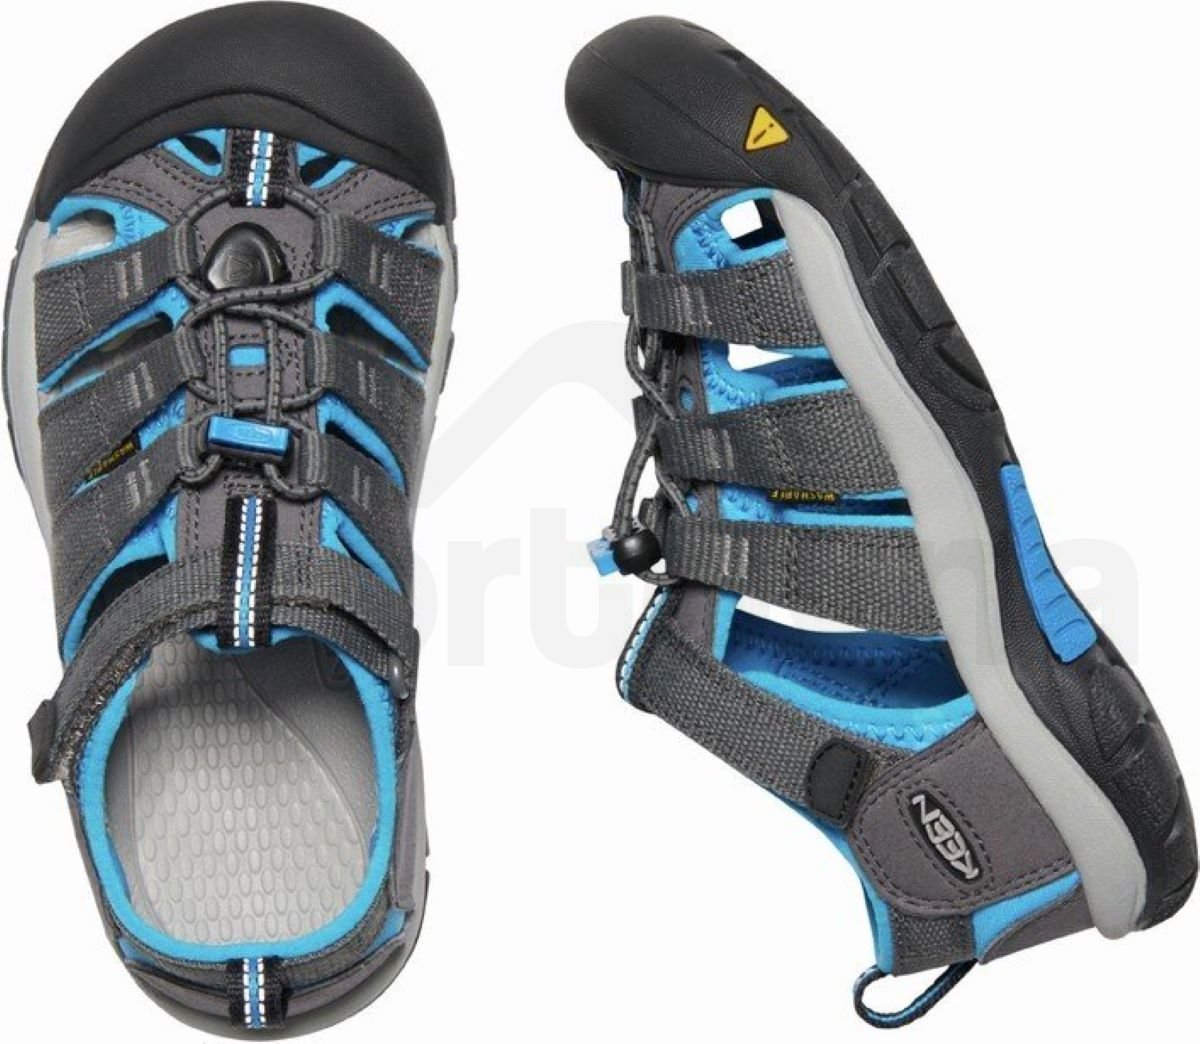 Obuv - sandály Keen Newport H2 K - šedá/modrá